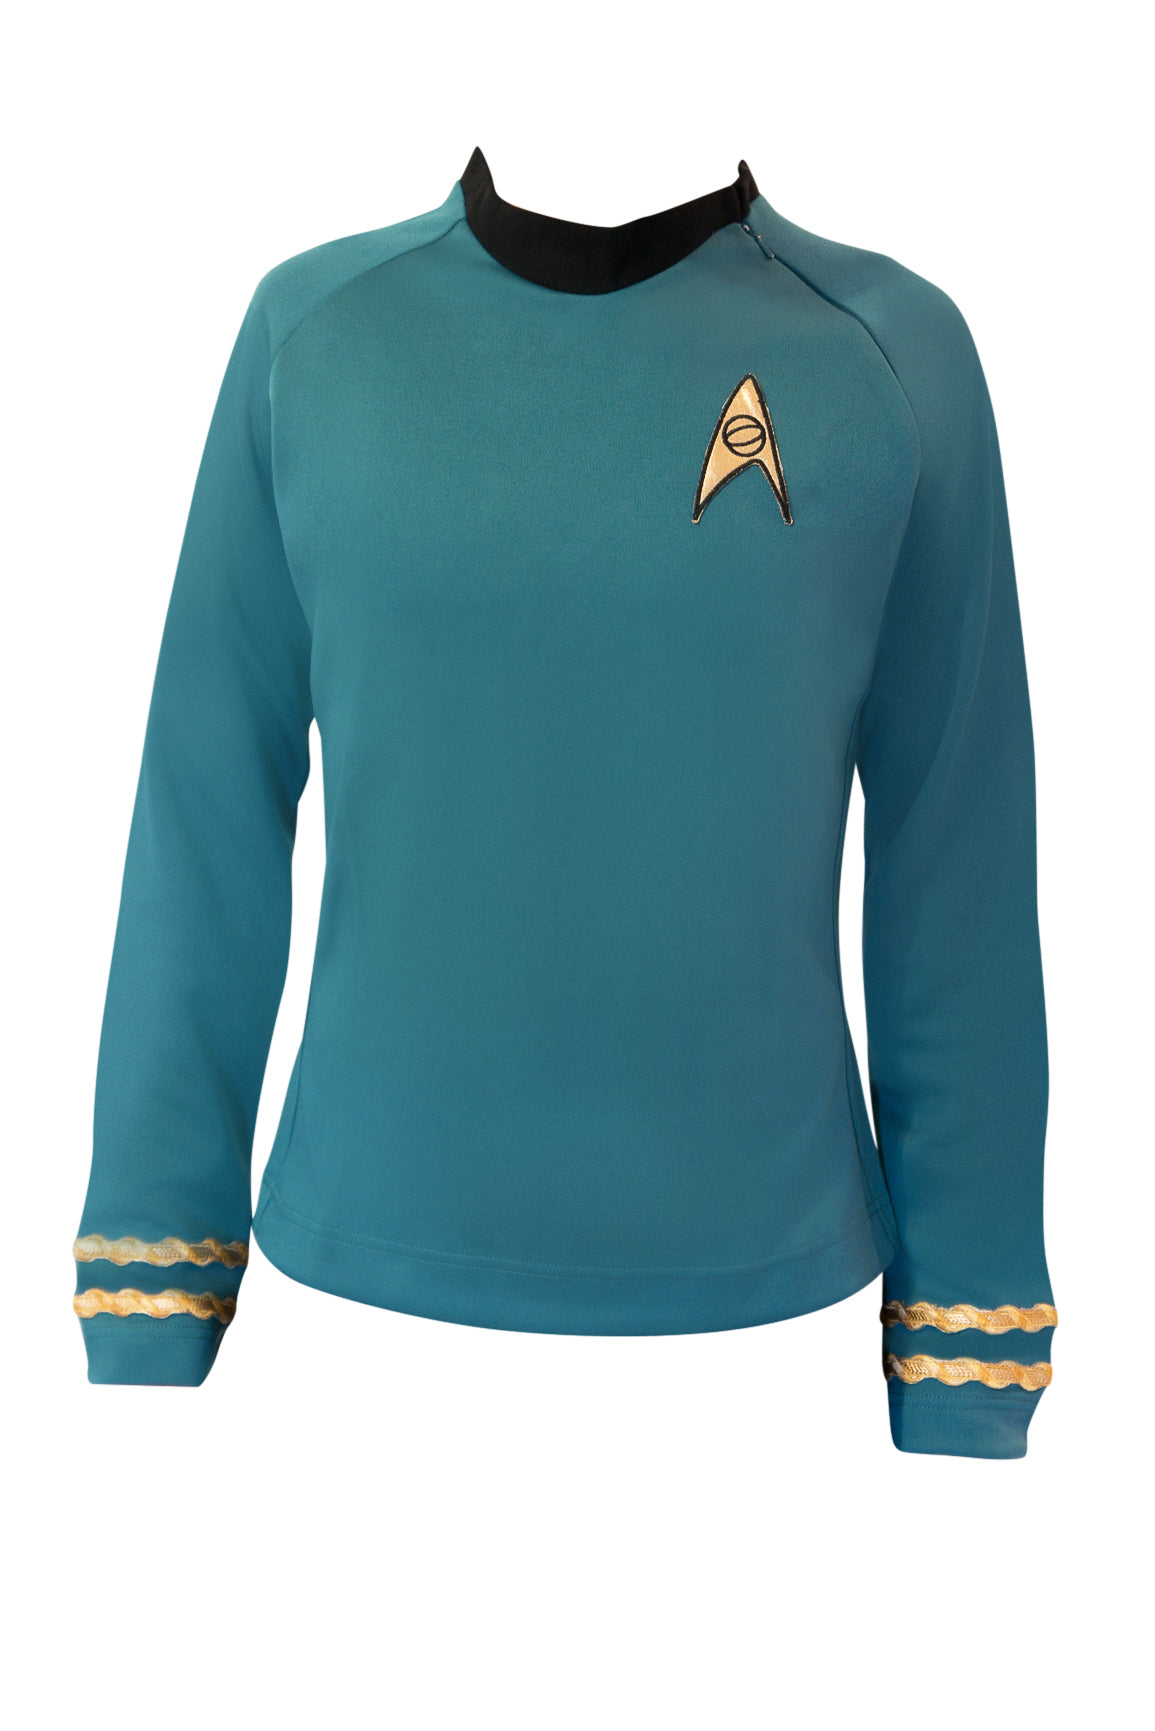 star trek spock uniform